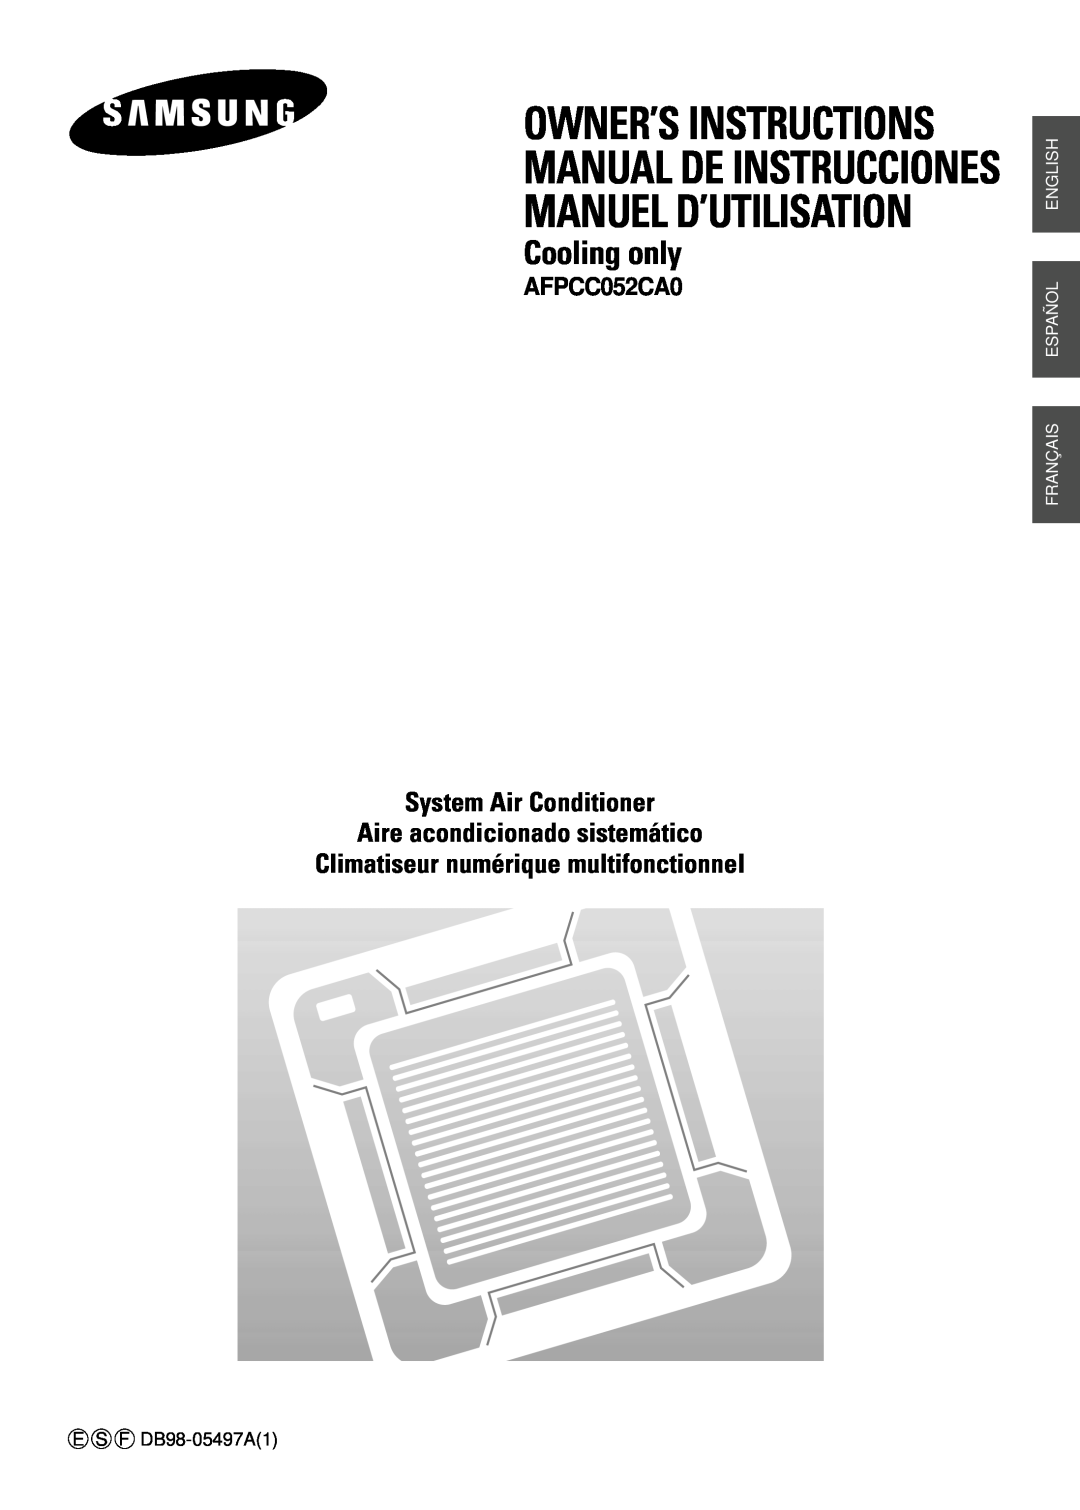 Samsung AFPCC052CA0 manuel dutilisation System Air Conditioner, Aire acondicionado sistemático, Owner’S Instructions 